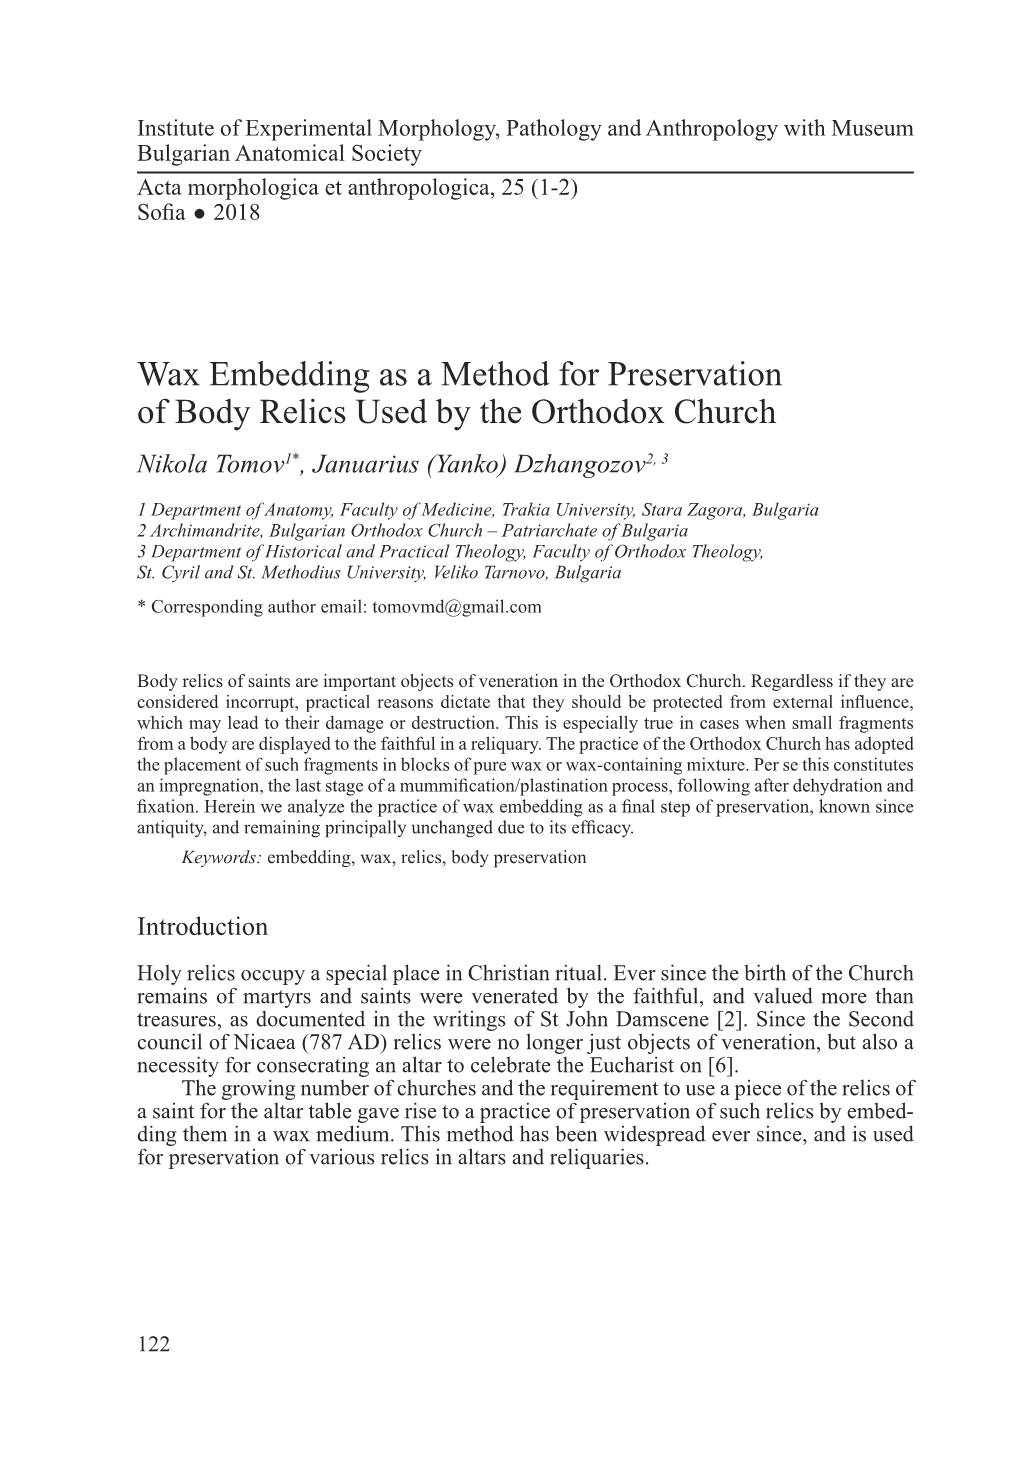 Wax Embedding As a Method for Preservation of Body Relics Used by the Orthodox Church Nikola Tomov1*, Januarius (Yanko) Dzhangozov2, 3